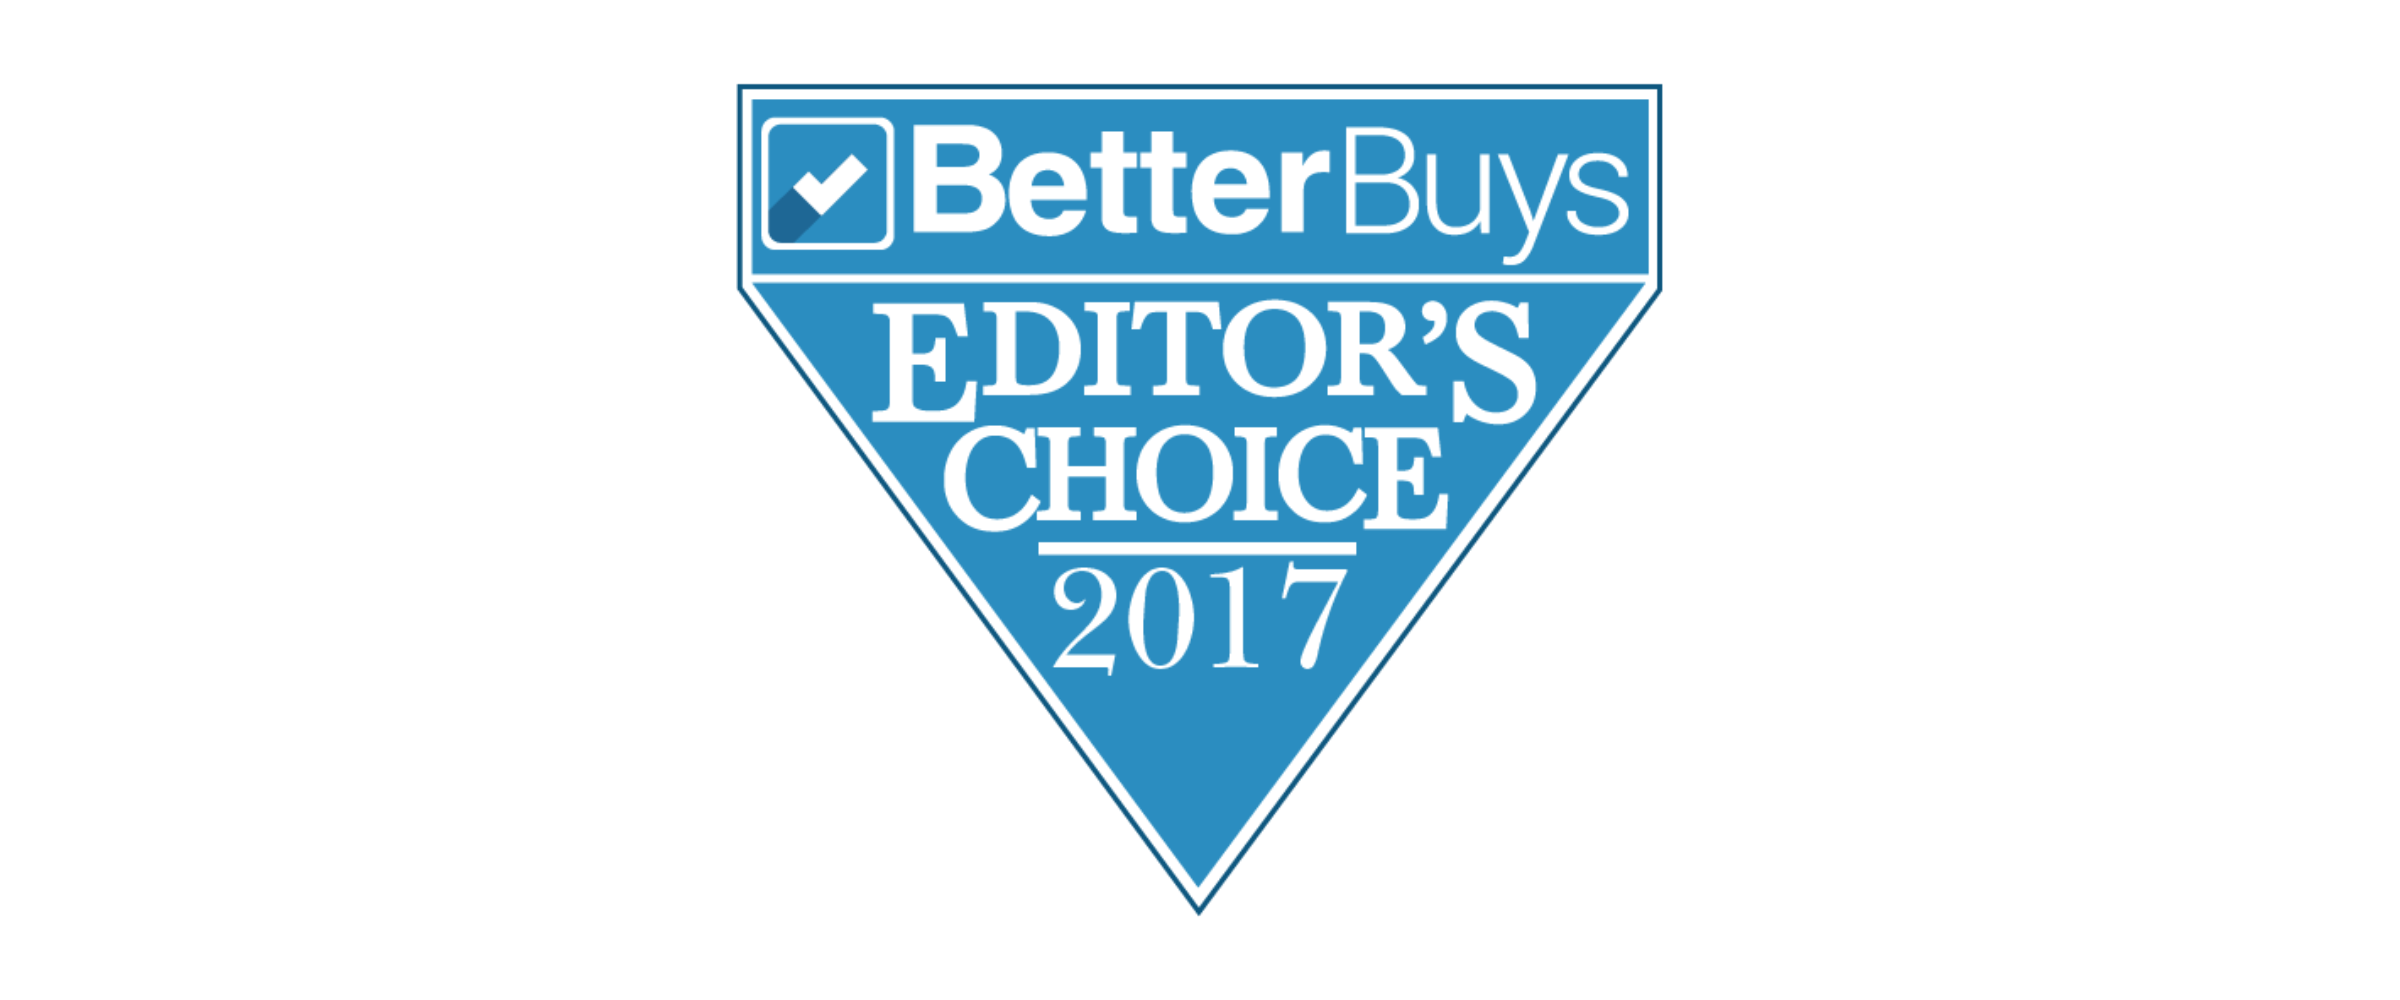 Better Buys Editors Choice Award